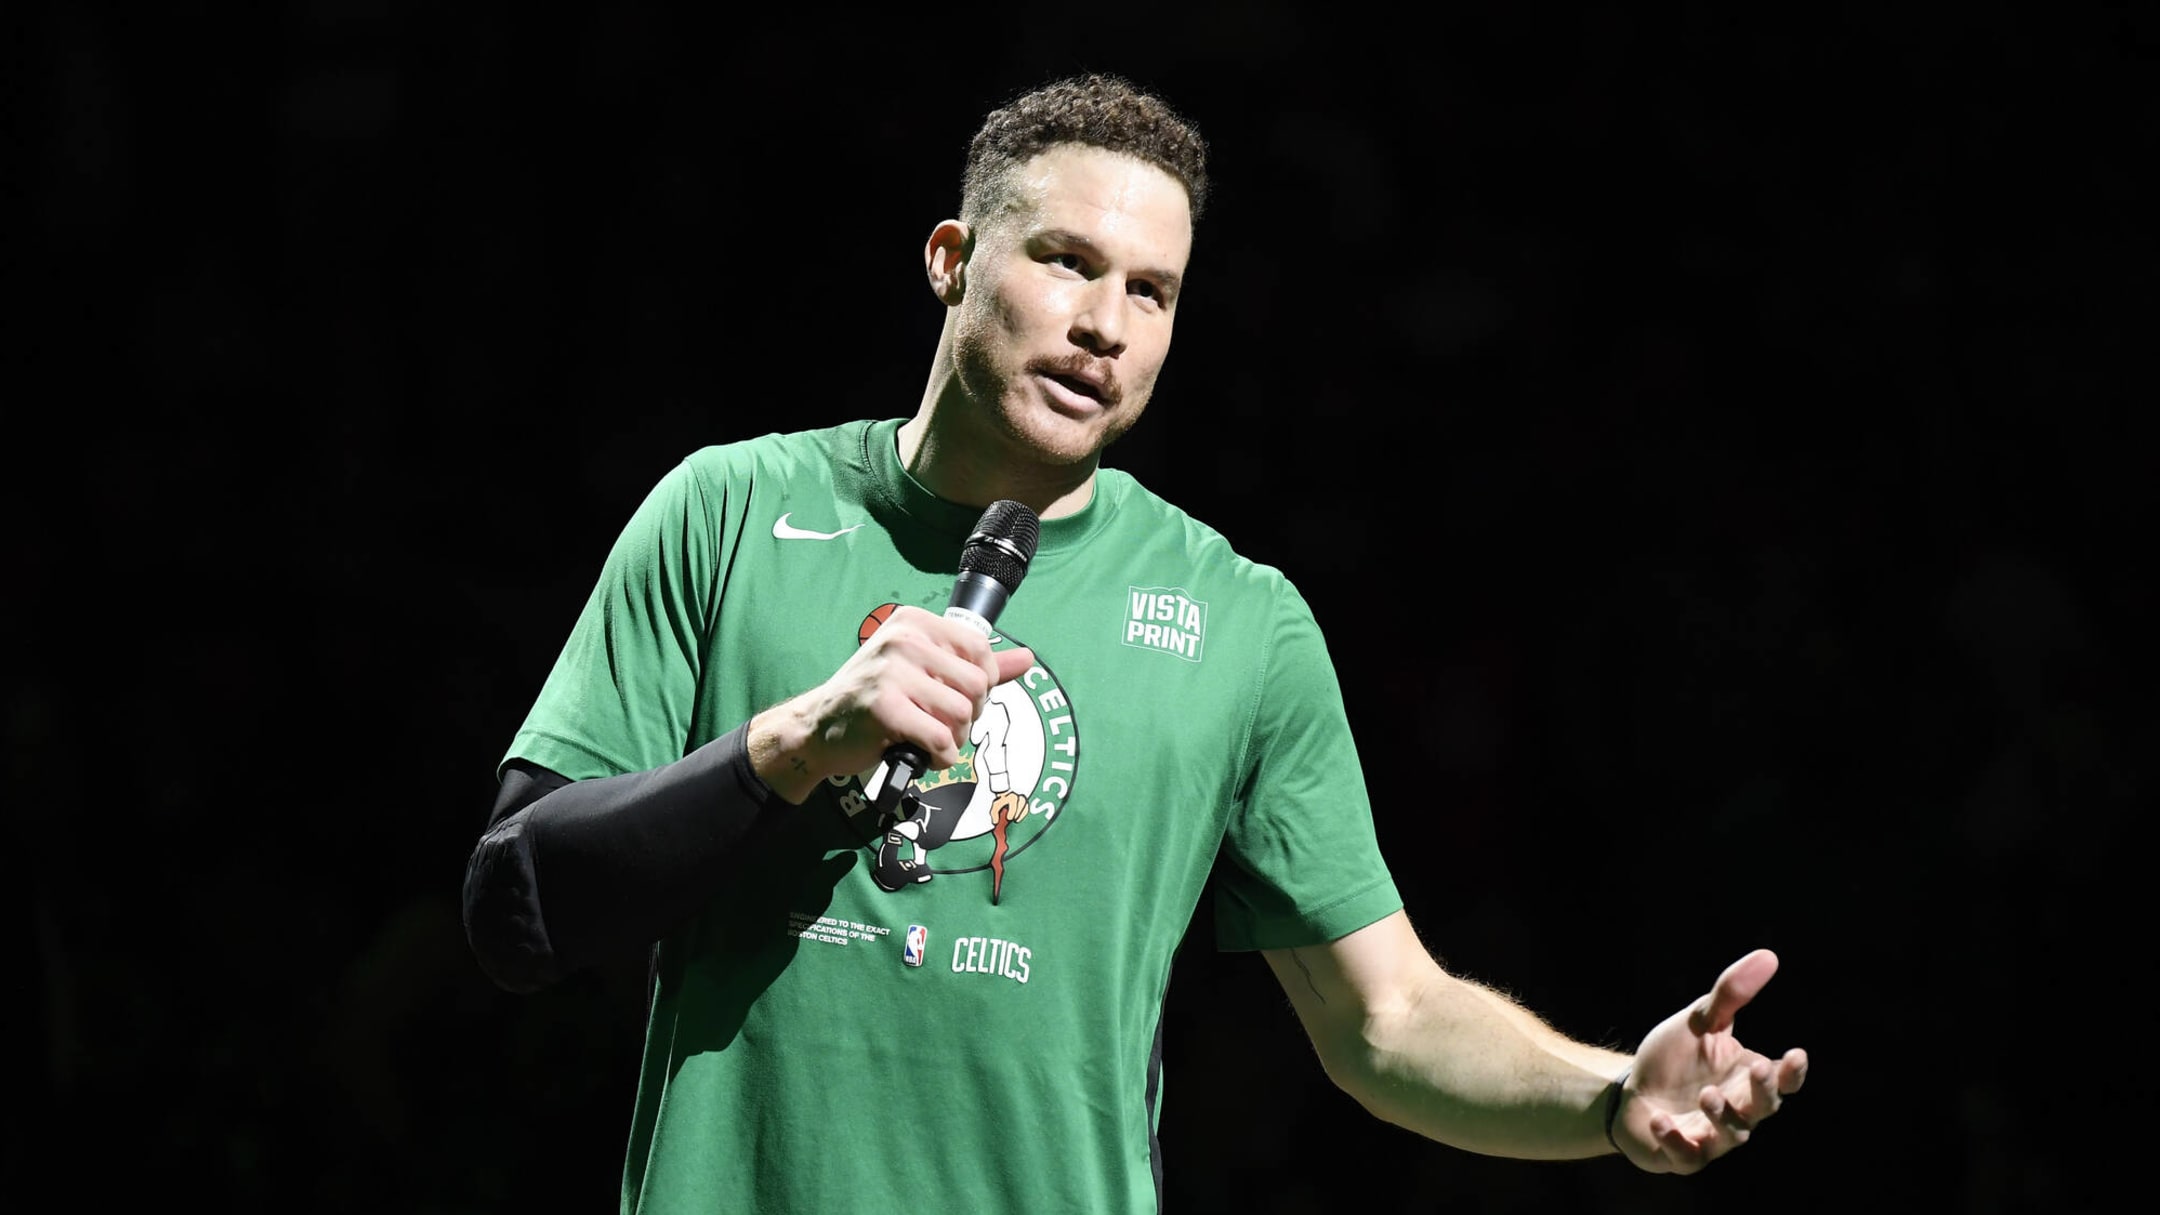 Celtics continue to court Blake Griffin return - CelticsBlog